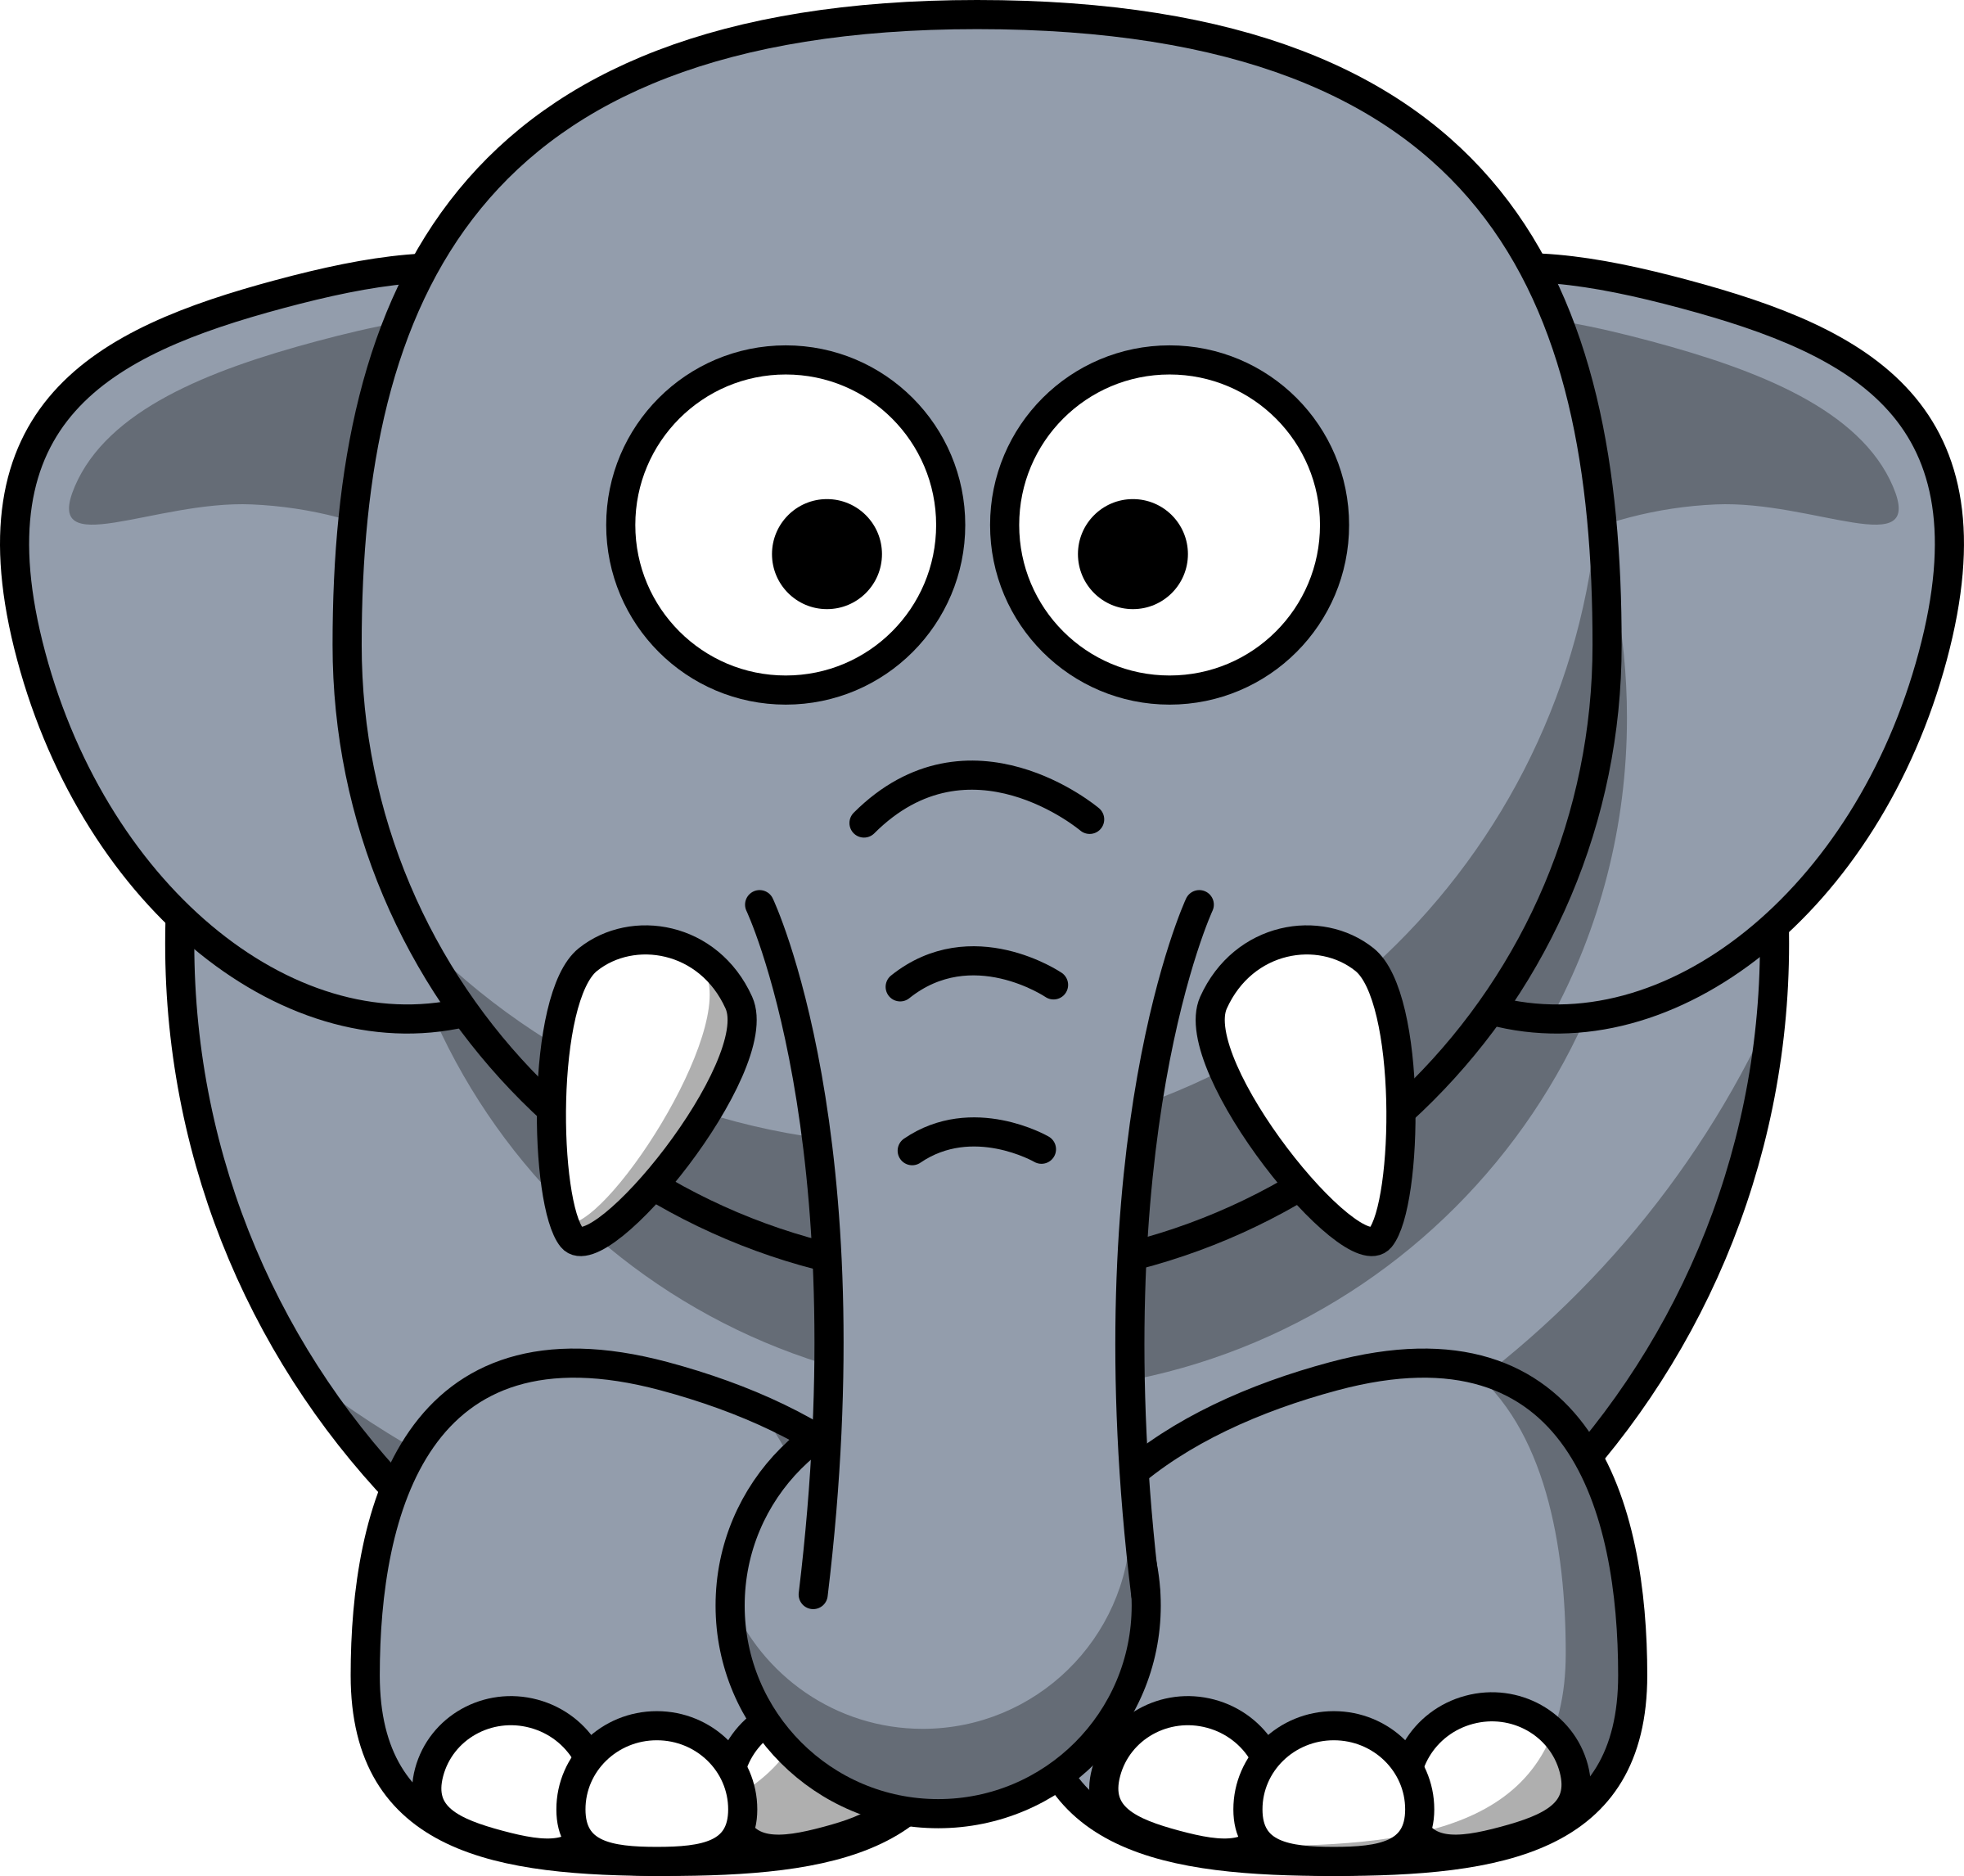 Elephant cartoon image